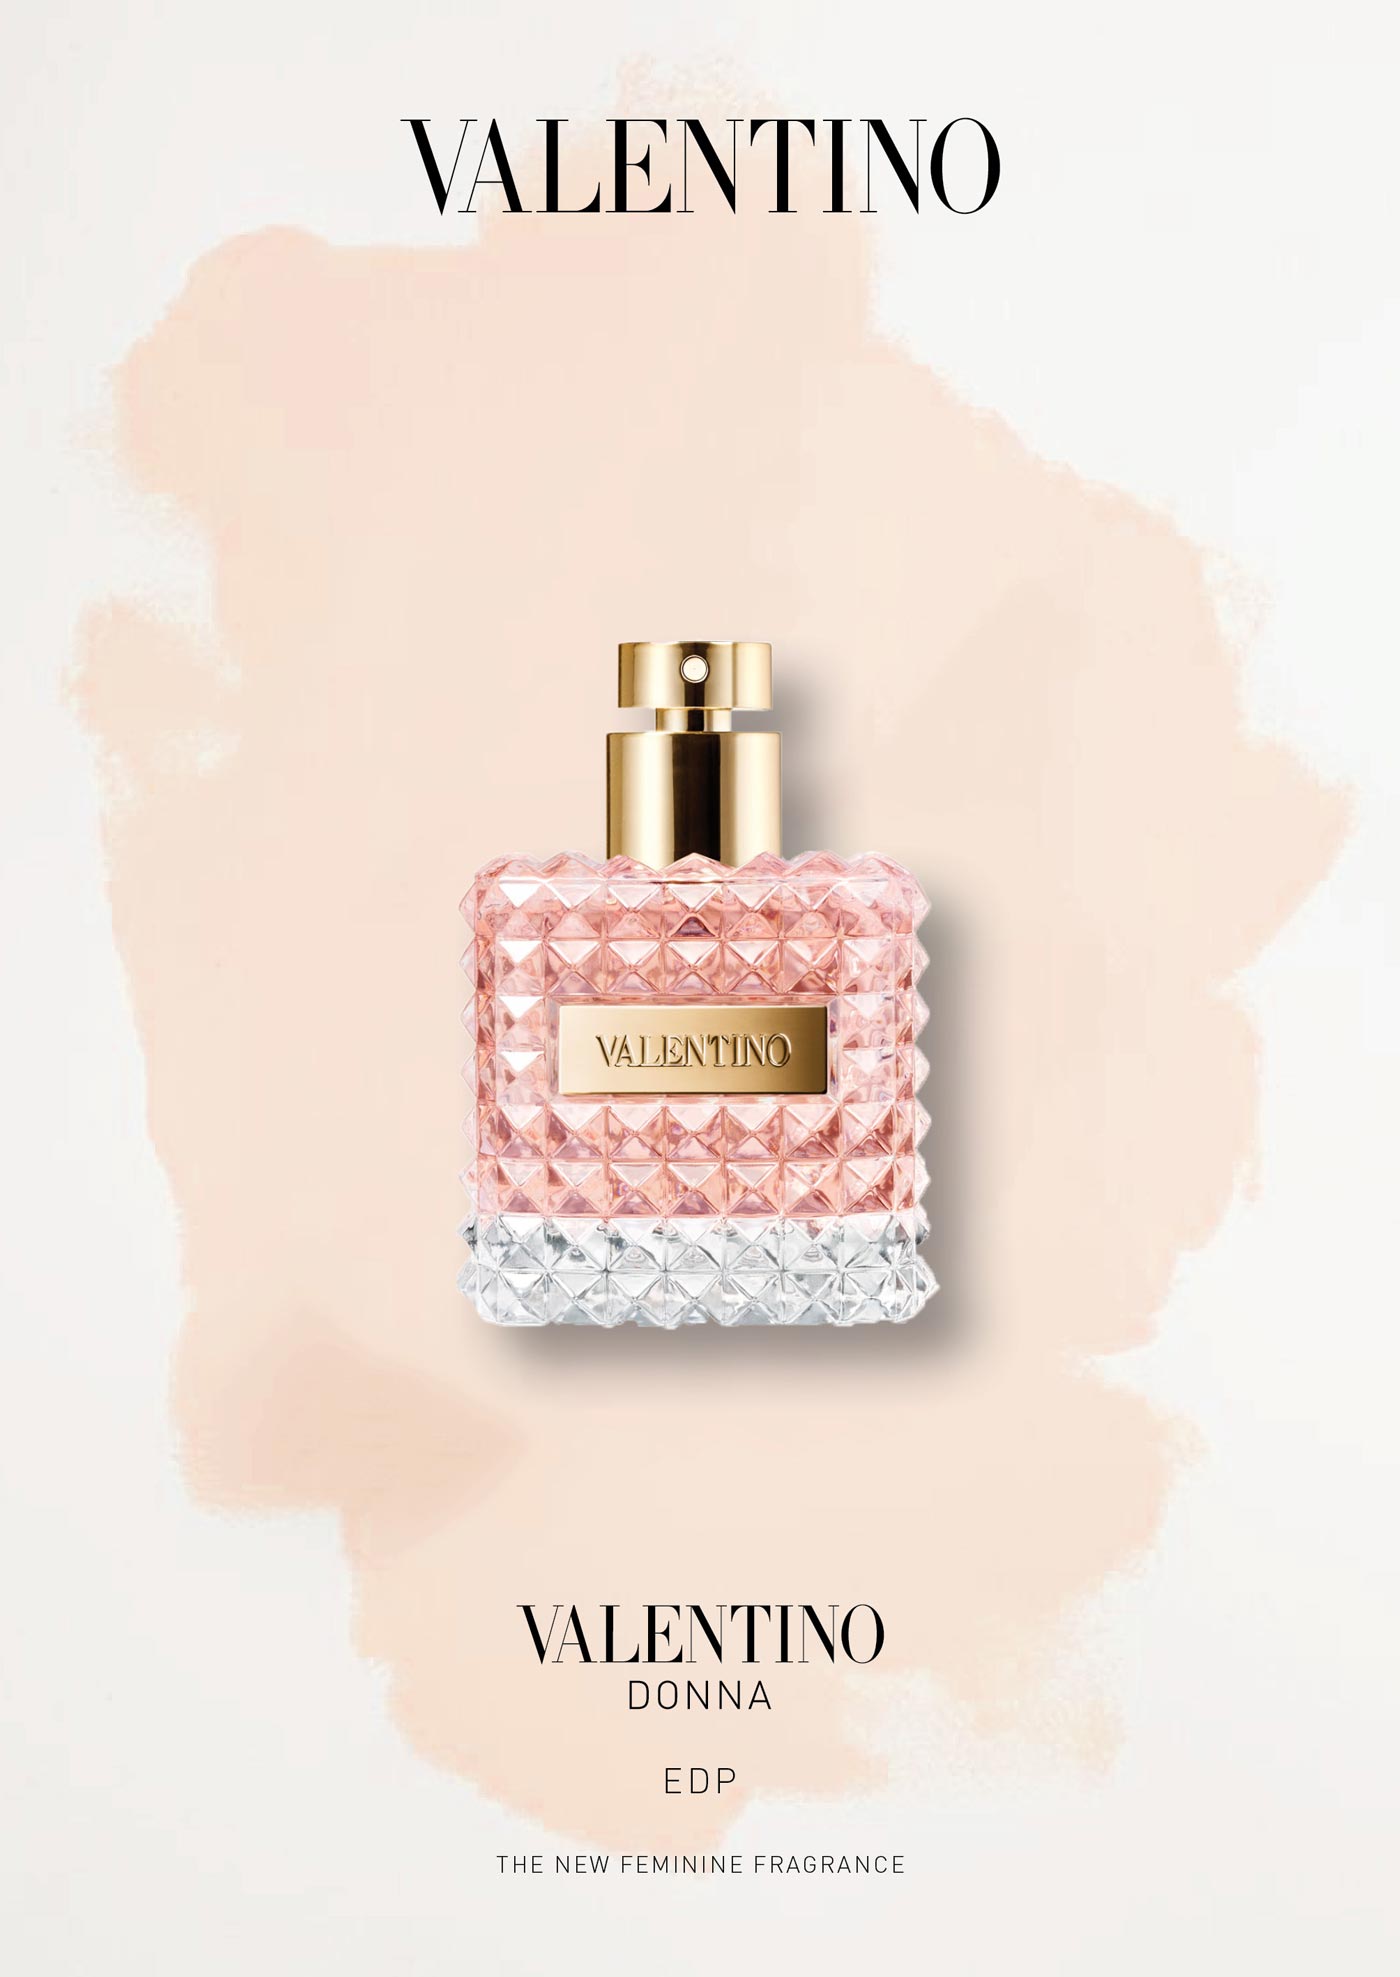 Valentino Parfums – Valentino Donna 2017 Campaign (prototype)